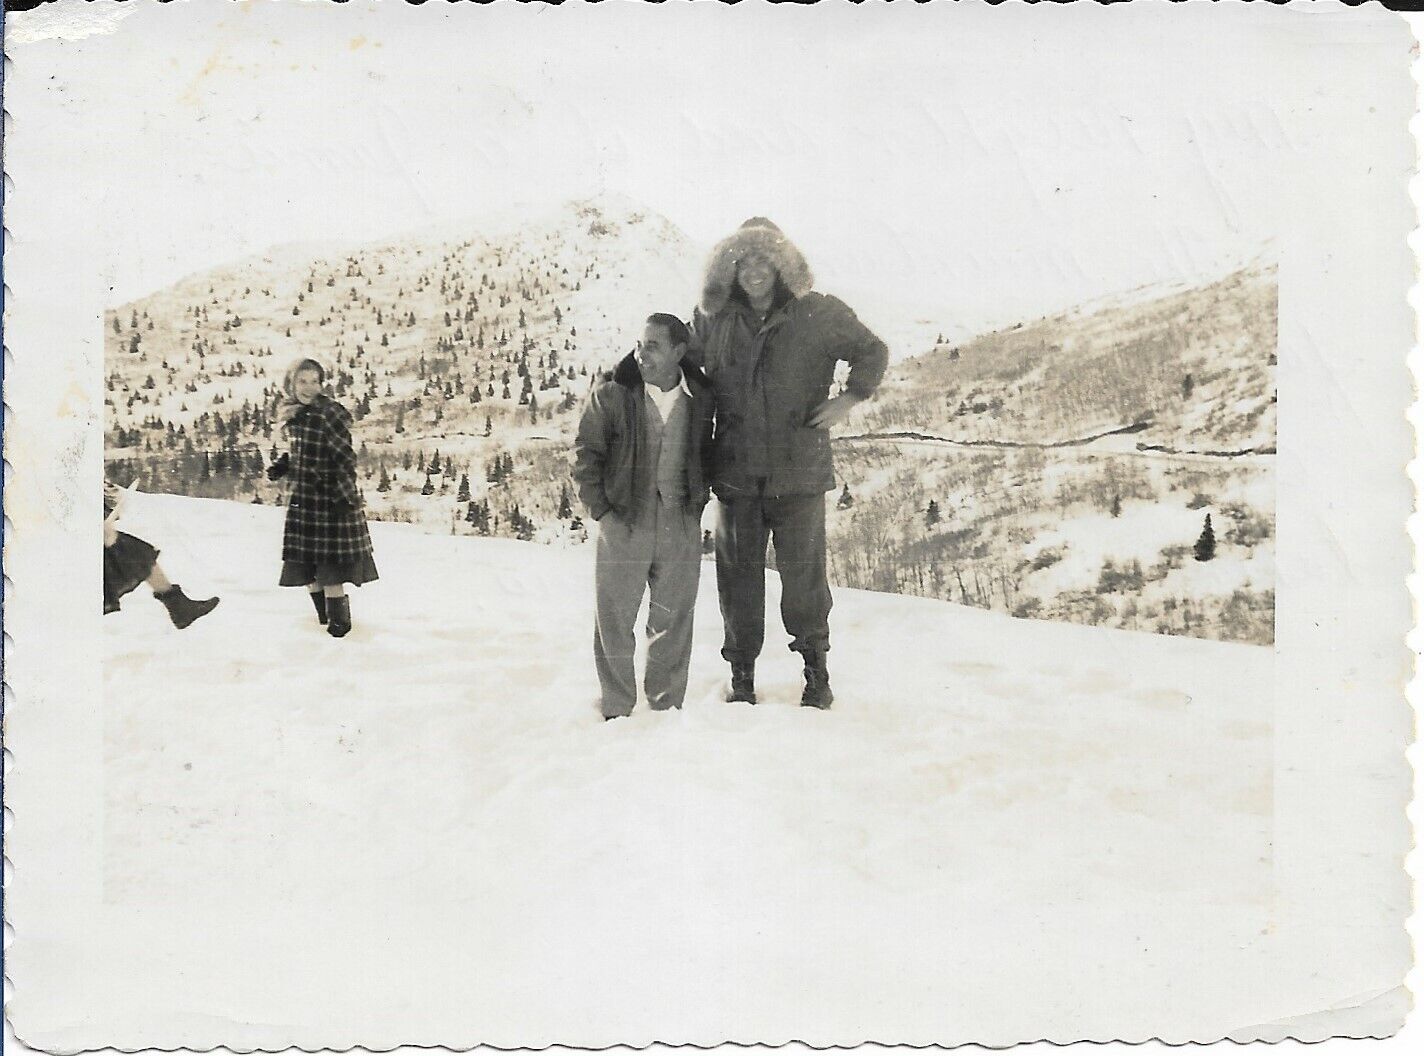 Two Men Photograph Snow 1950s Mountains Vintage Outdoors 3 1/2 x 4 3/4